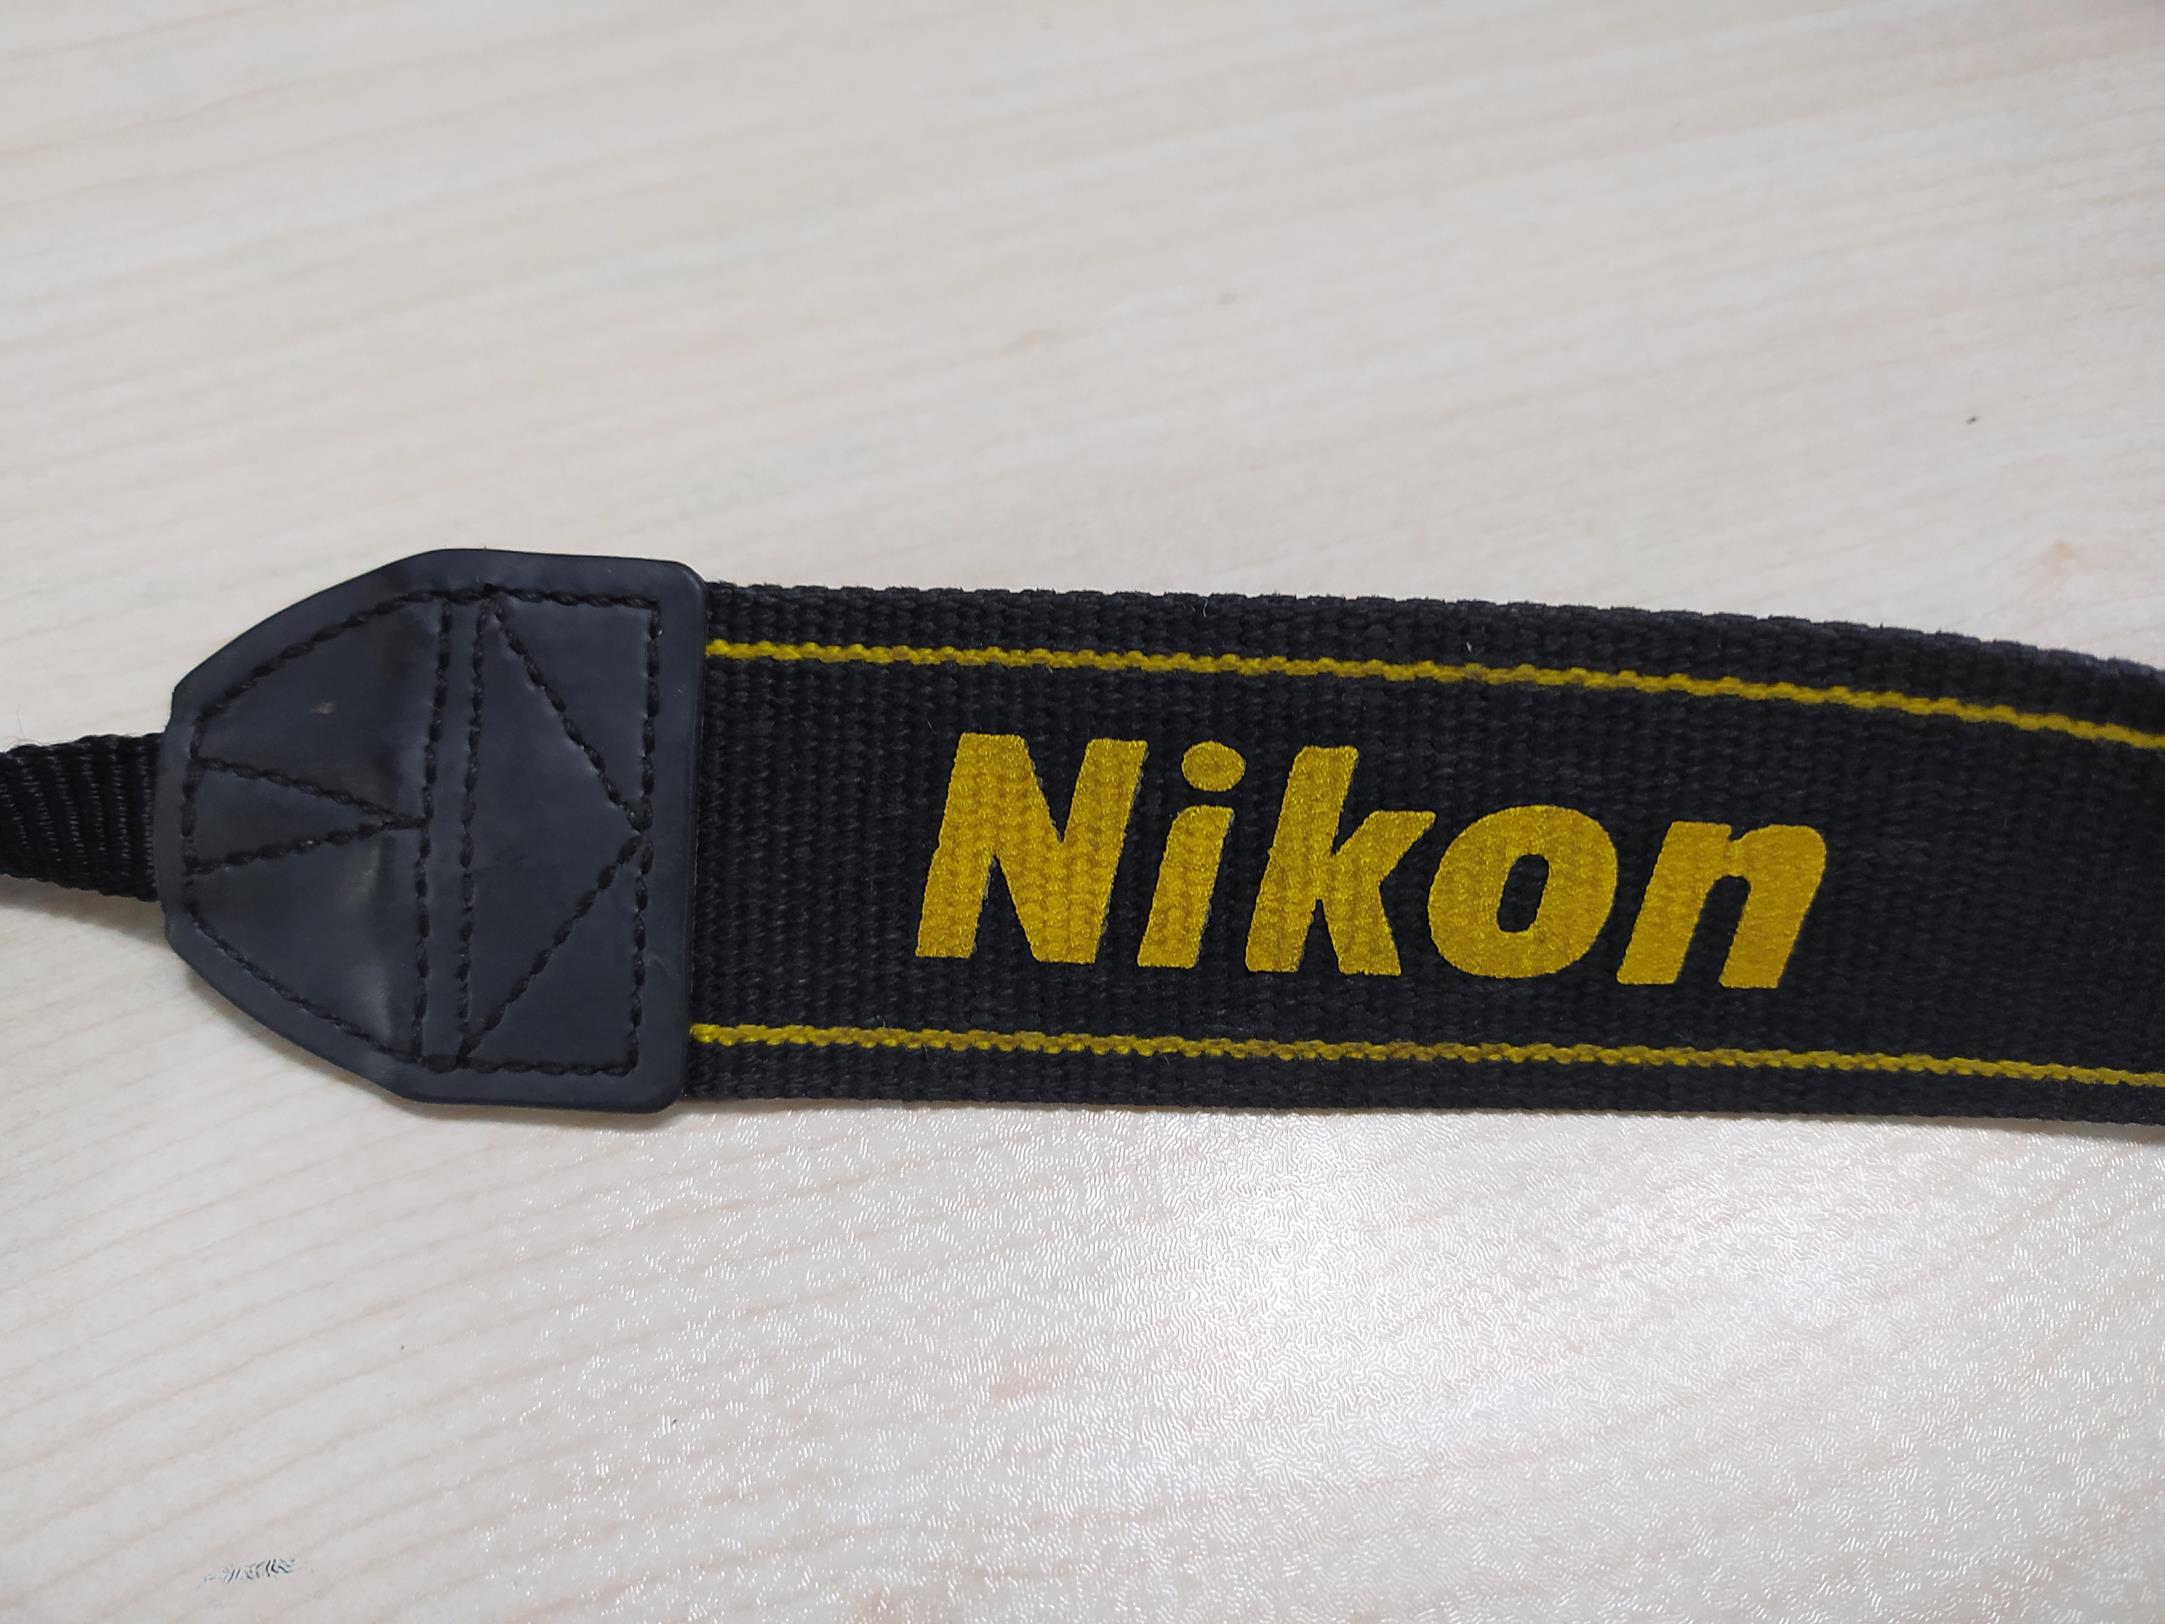 بند دوربین مارک نیکون Nikon 